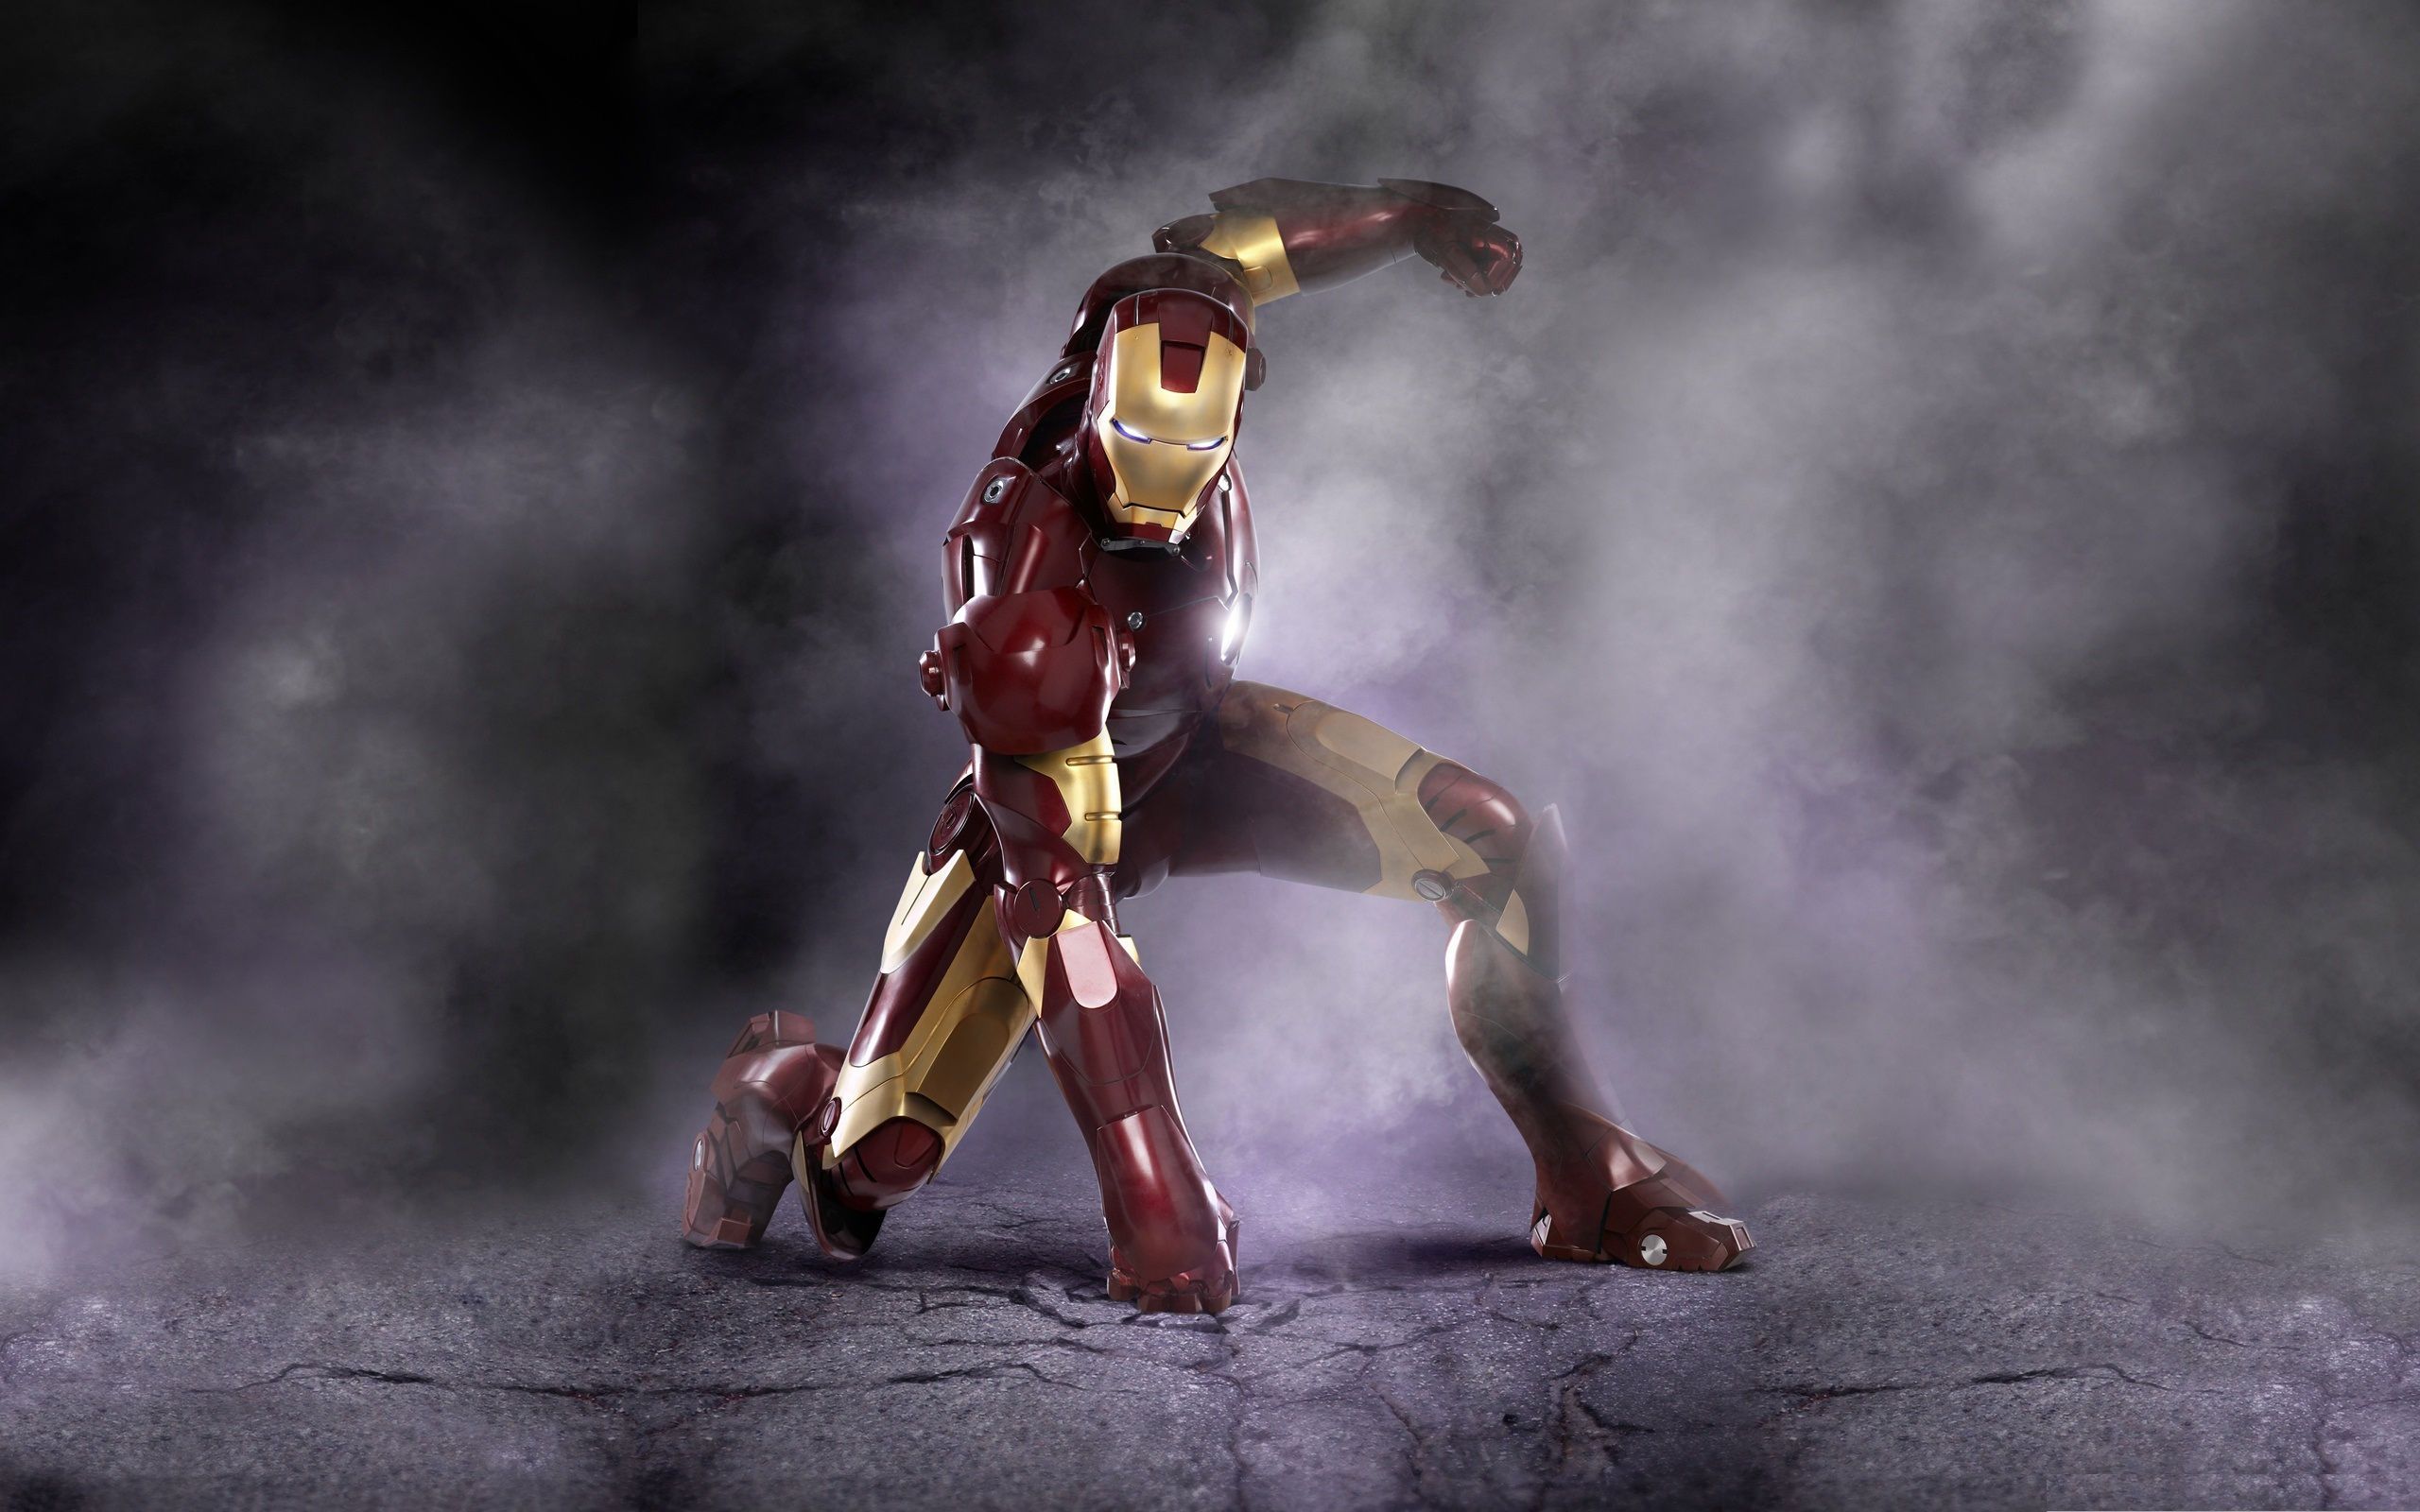 Iron Man HD Wallpapers Iron Man Desktop Images Cool Backgrounds